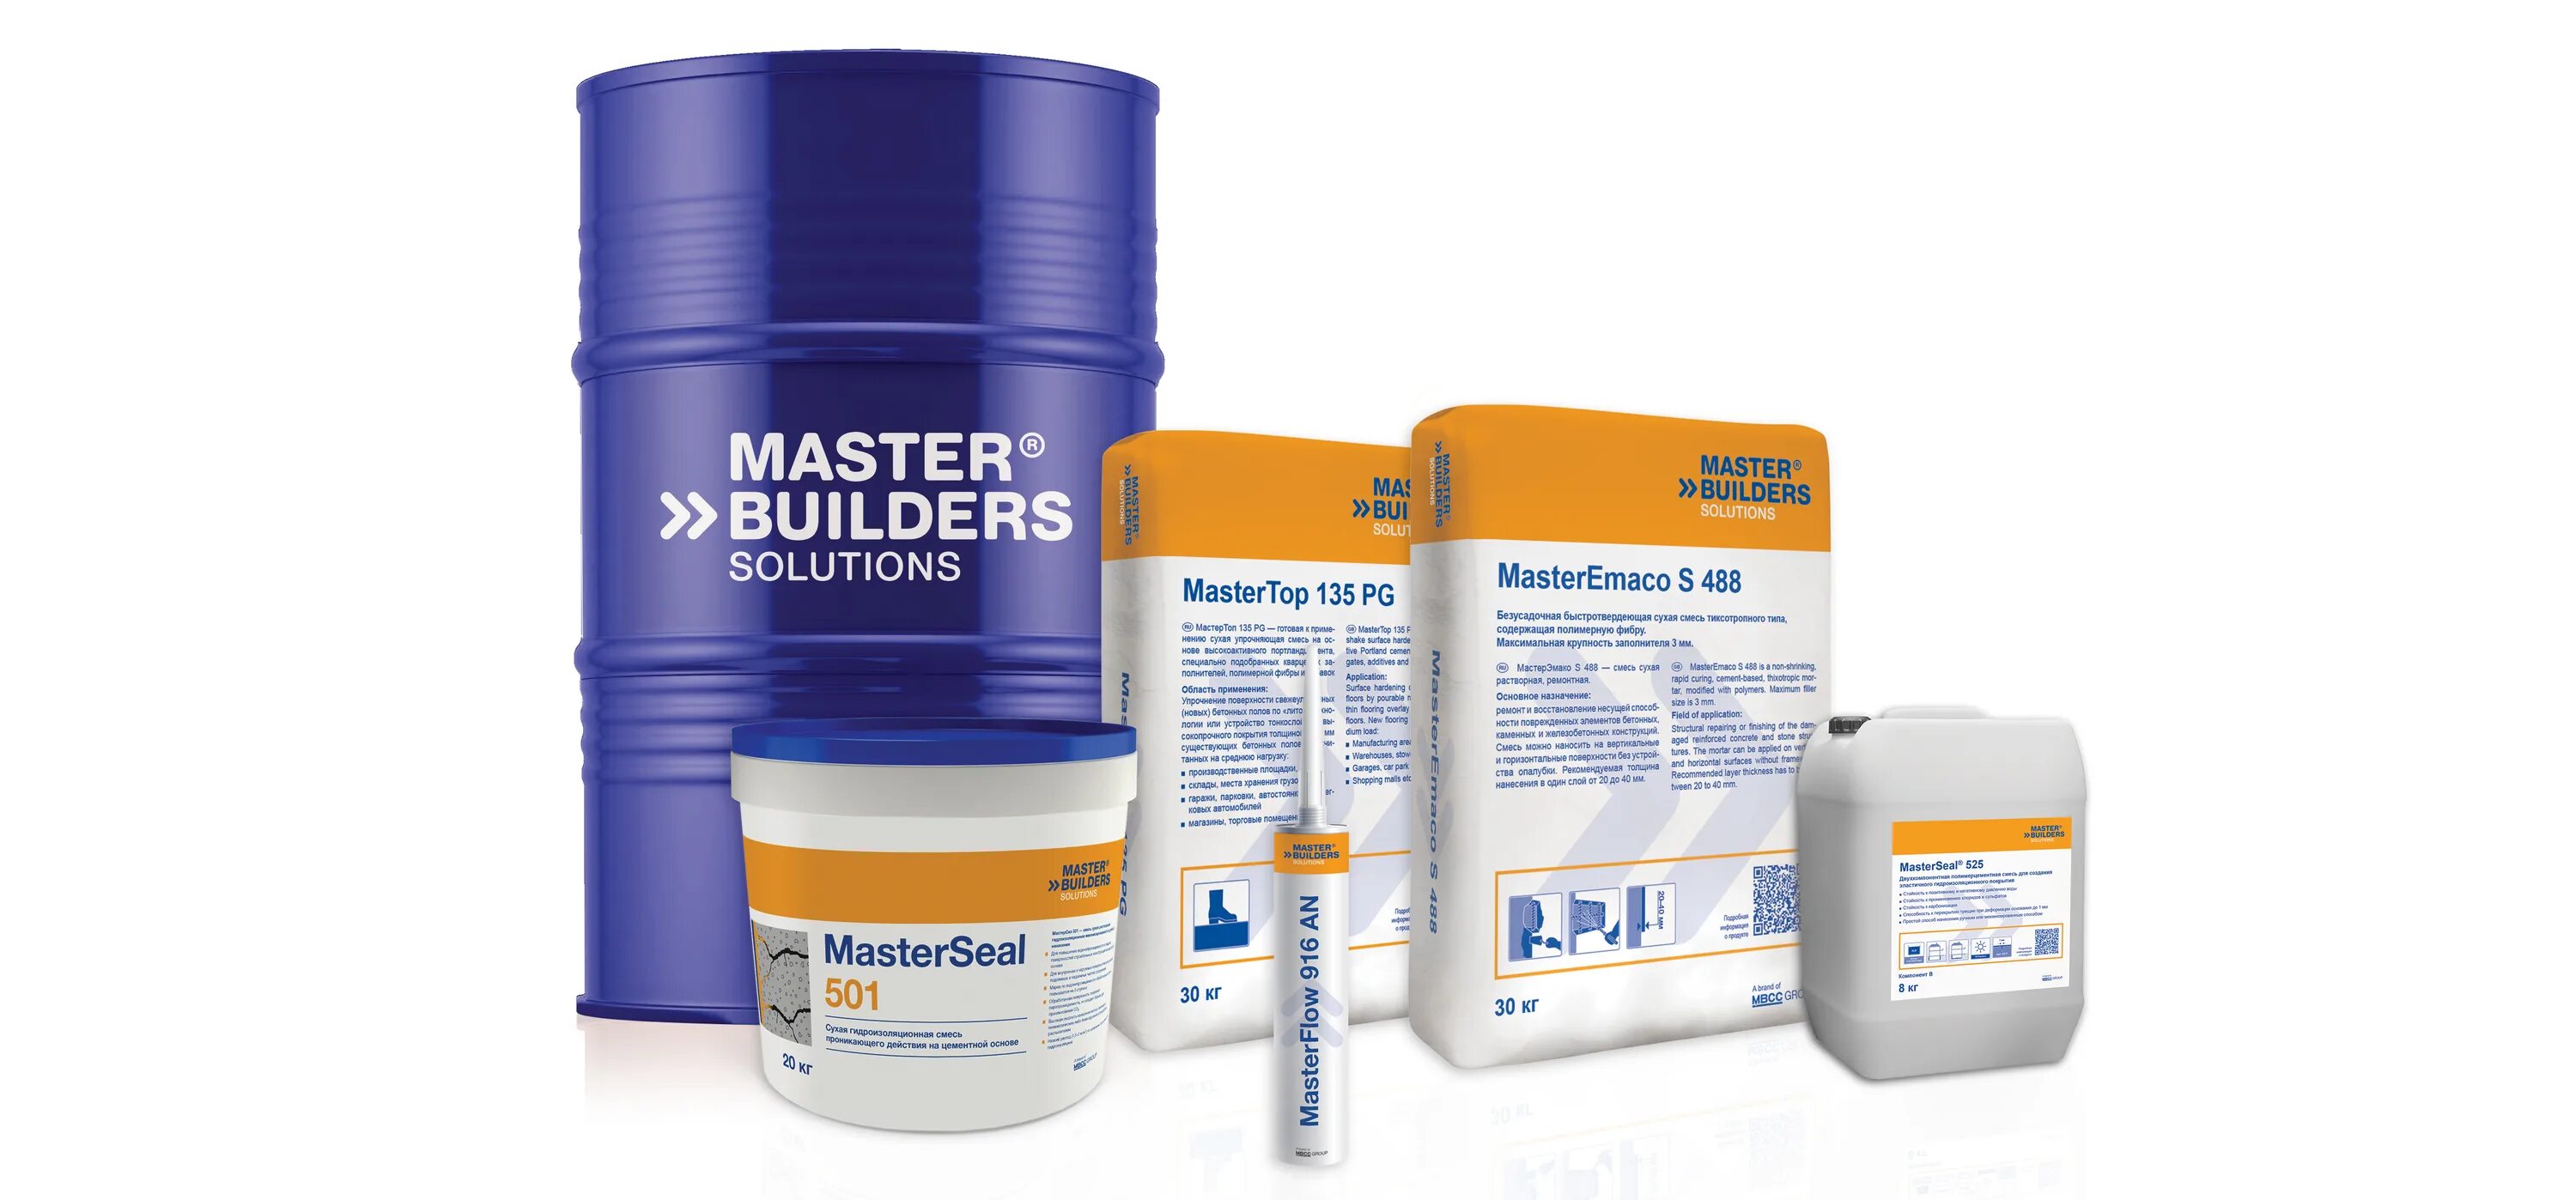 Master builders. Мастер билдер солюшен. Гидроизоляция 2-компонентная MASTERSEAL 525 (А). Добавка для бетона Master Builders. Логотип Master Builders solutions.